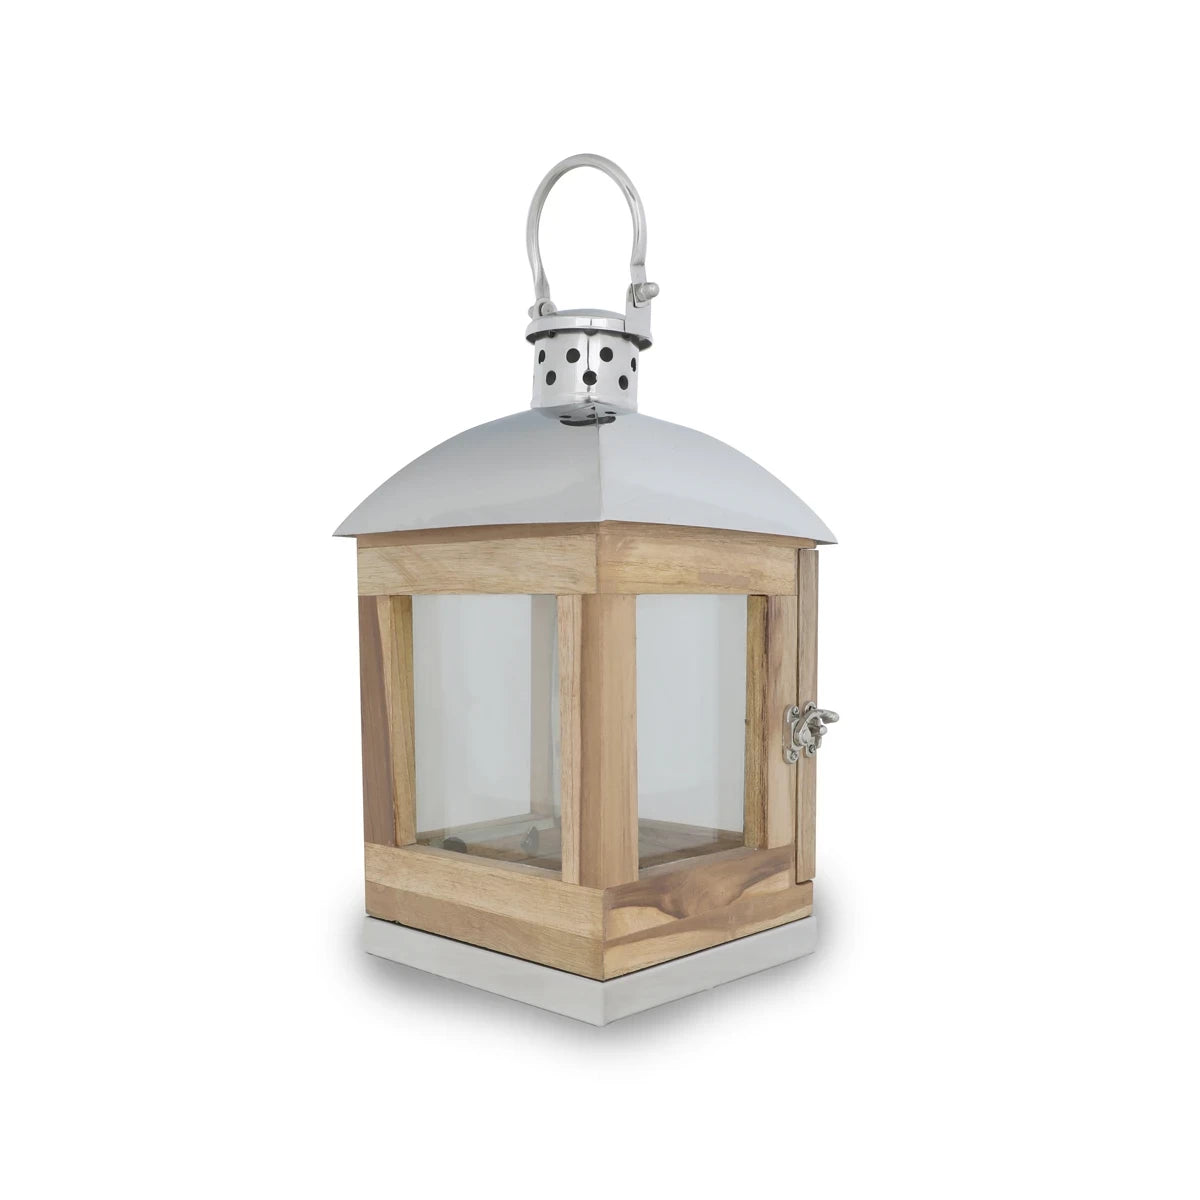 Metallic Chrome Floor Lantern with Wooden Frames - Short